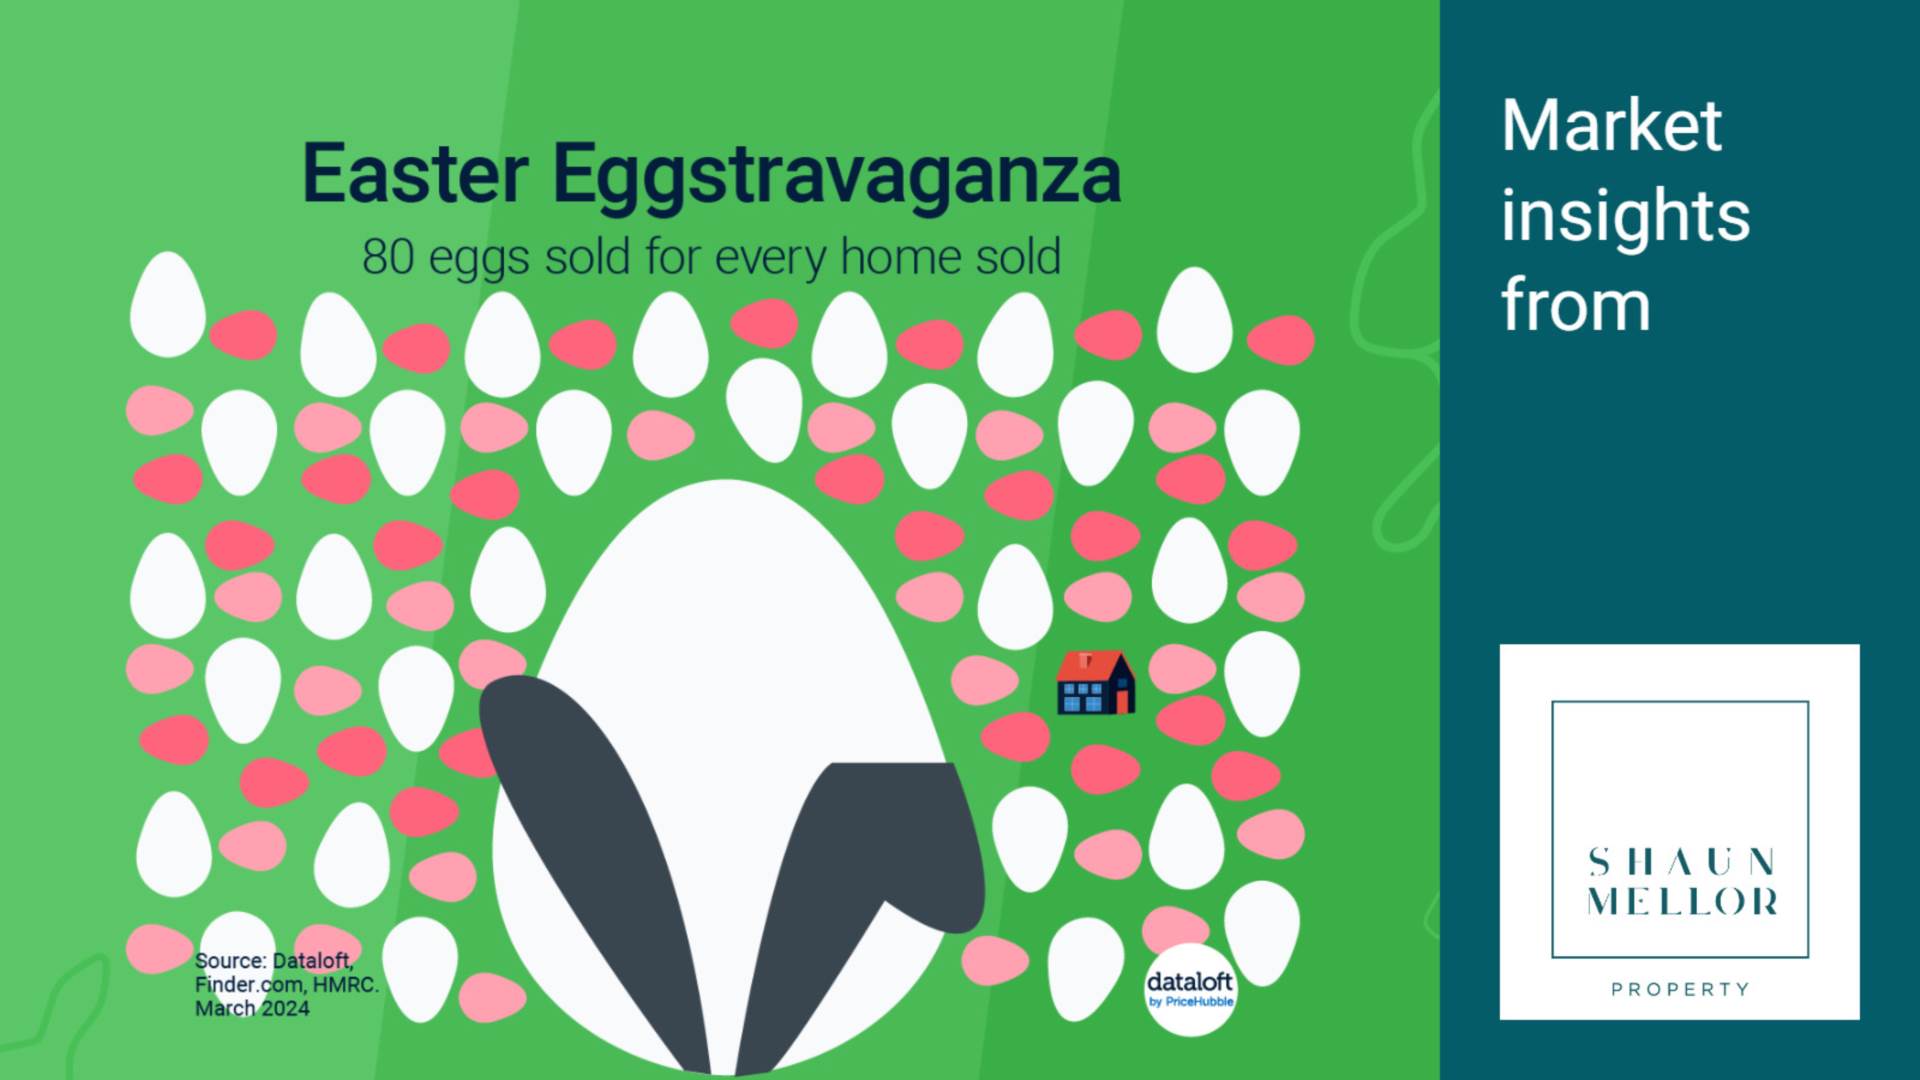 Ester Eggstravaganza